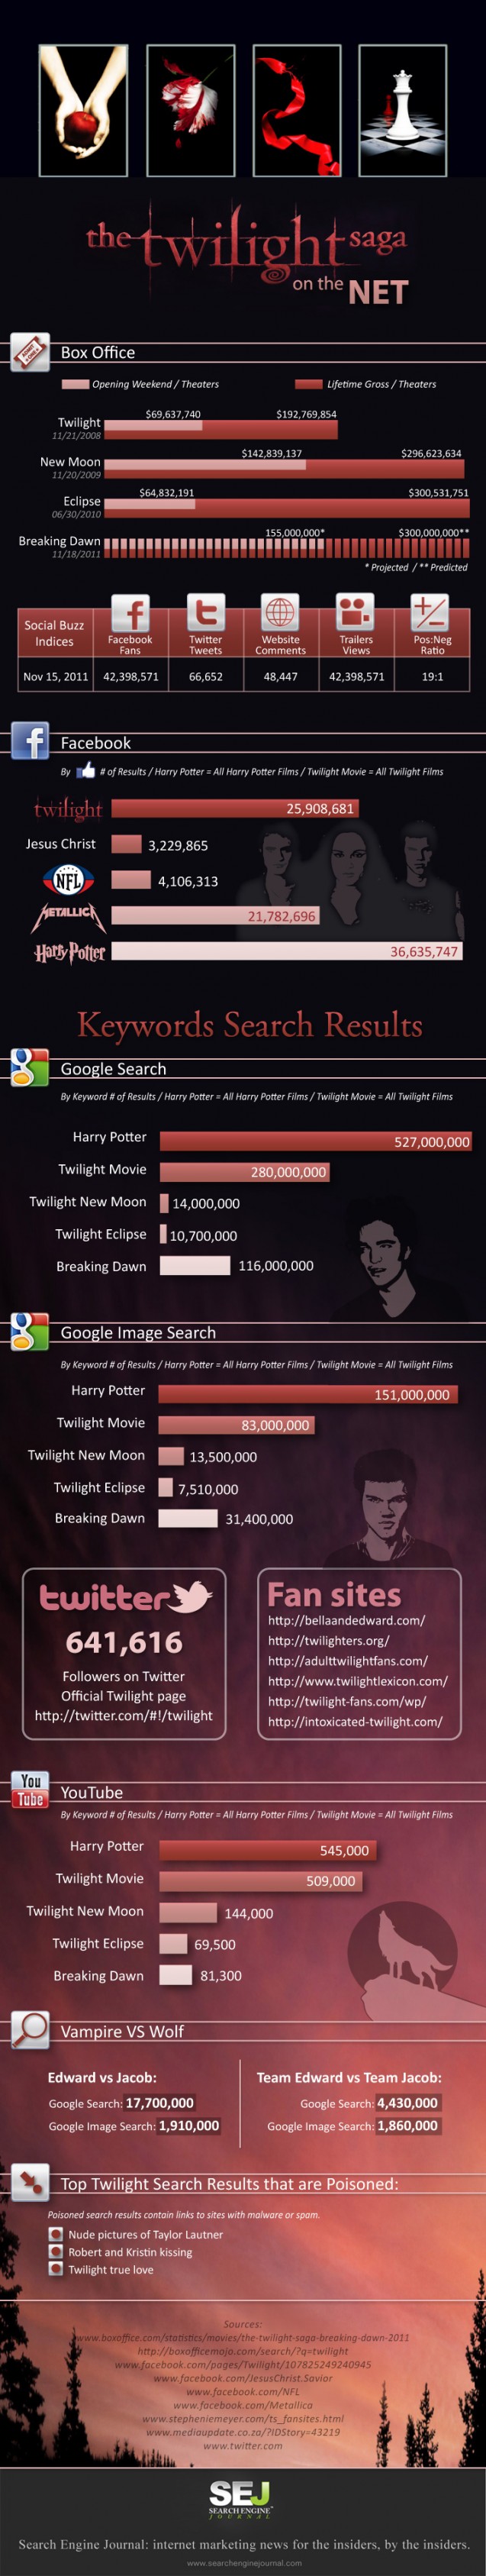 #Twilight Saga and Breaking Dawn Stats [SEJ Infographic]